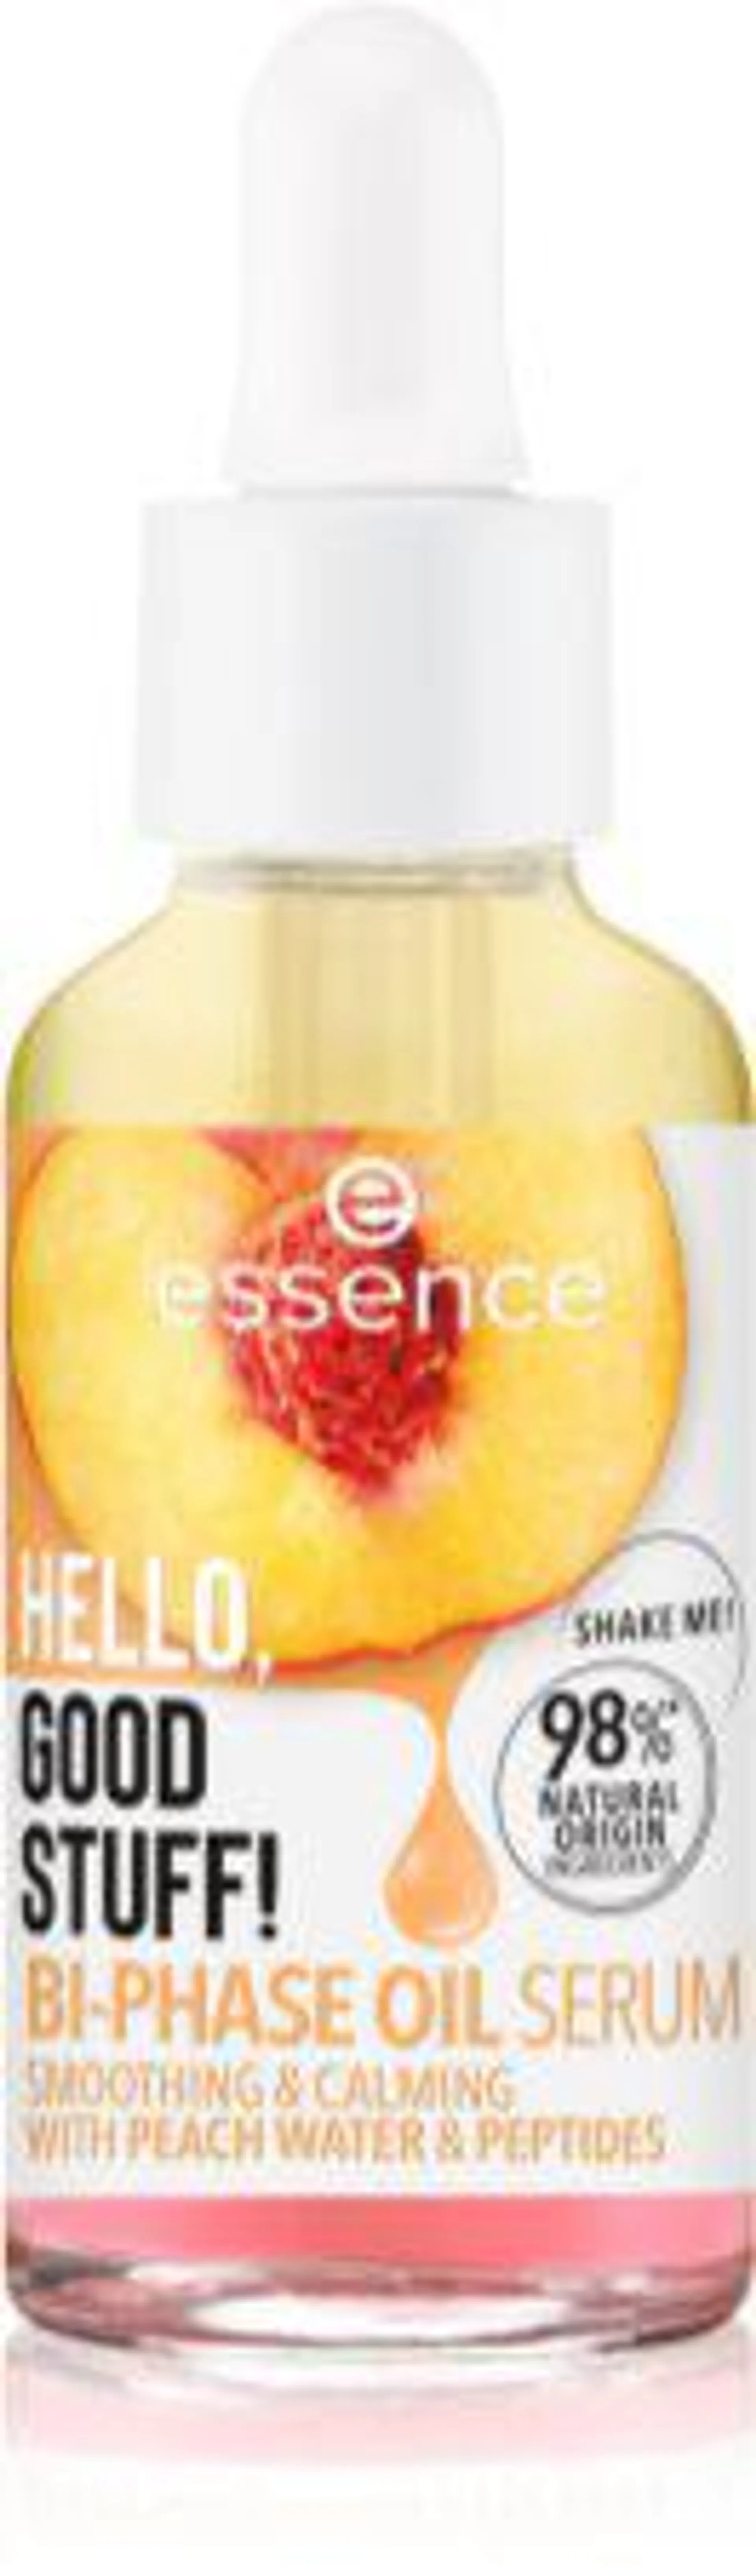 Hello, Good Stuff! Peach Water & Peptides